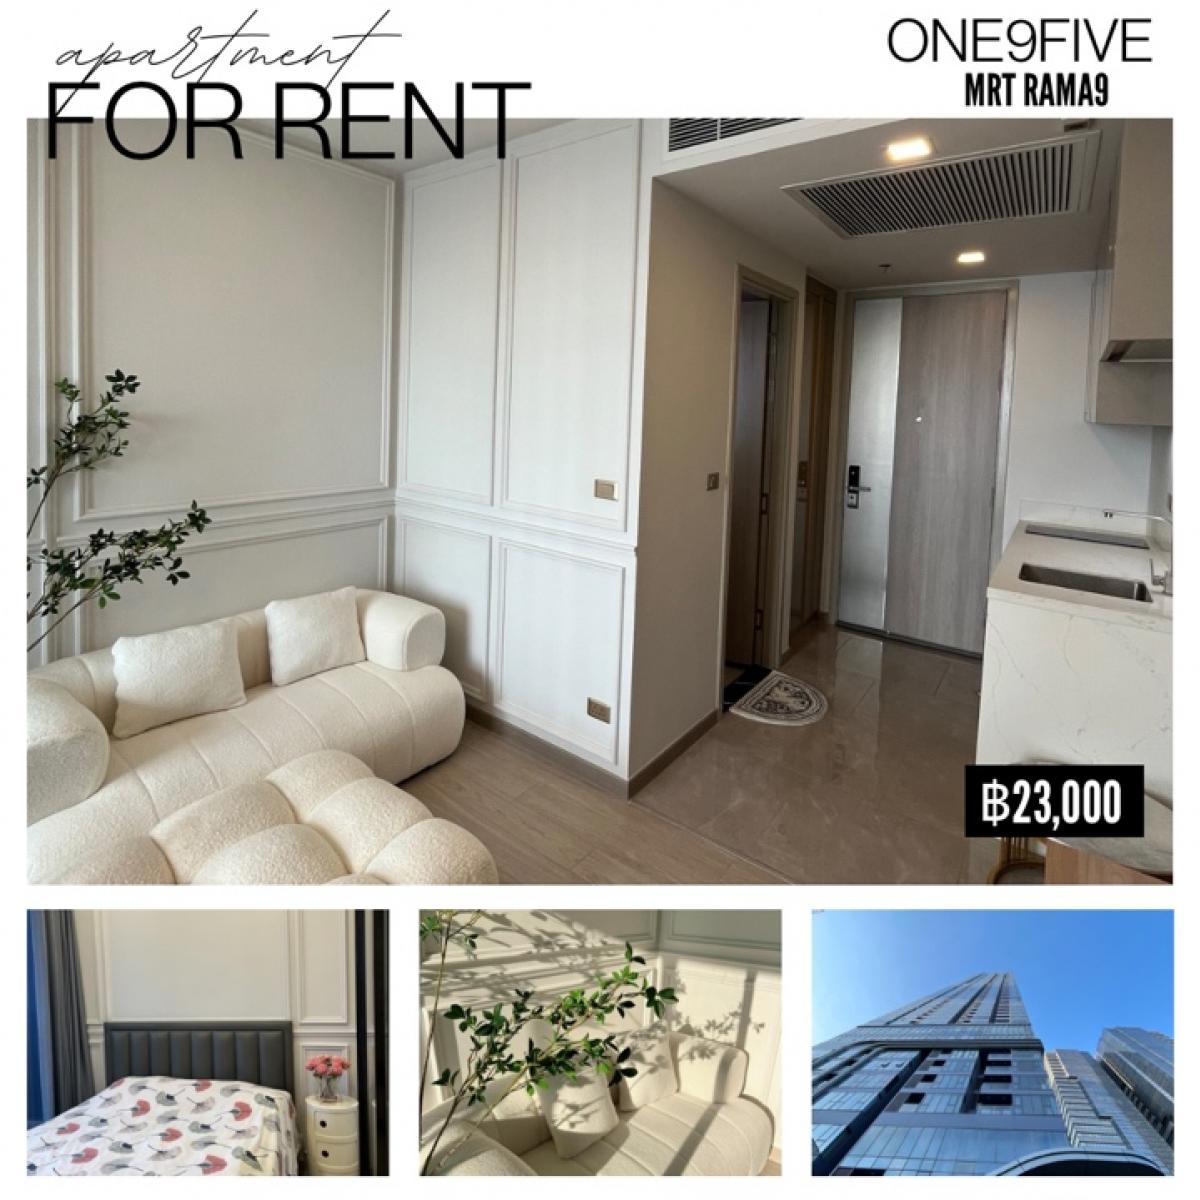 For RentCondoRama9, Petchburi, RCA : For rent, One9five Asoke-Rama9, 1 bedroom, 1 bathroom, 54th floor, Building B.